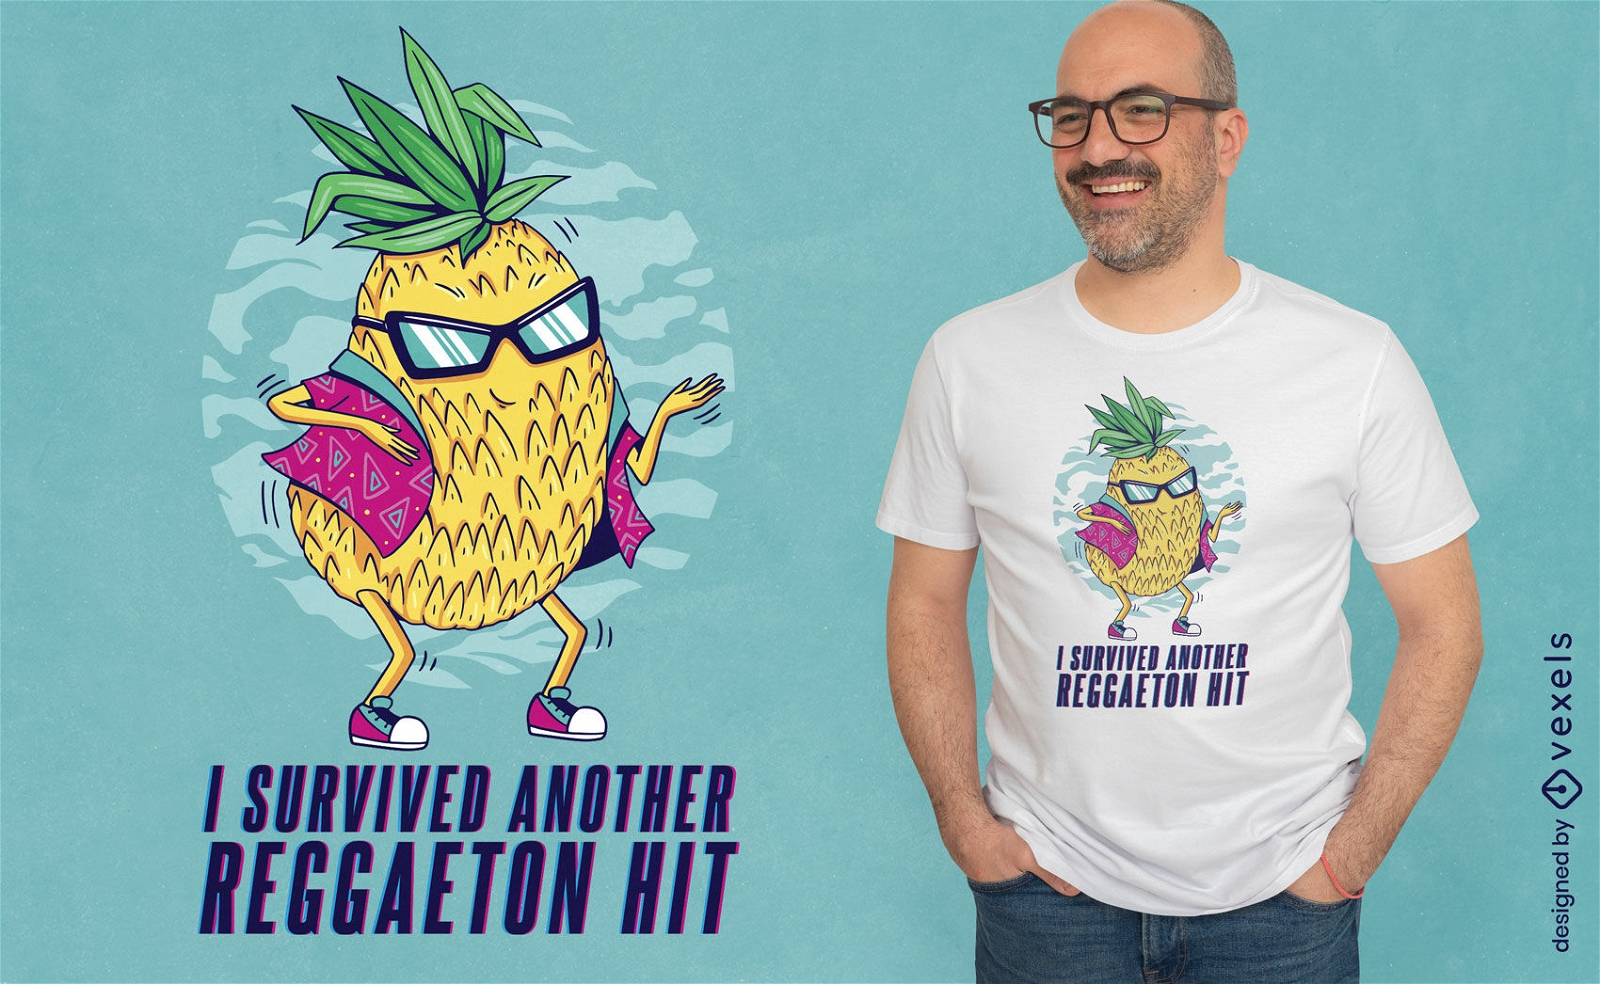 Diseño de camiseta con cita de reggaeton de piña.